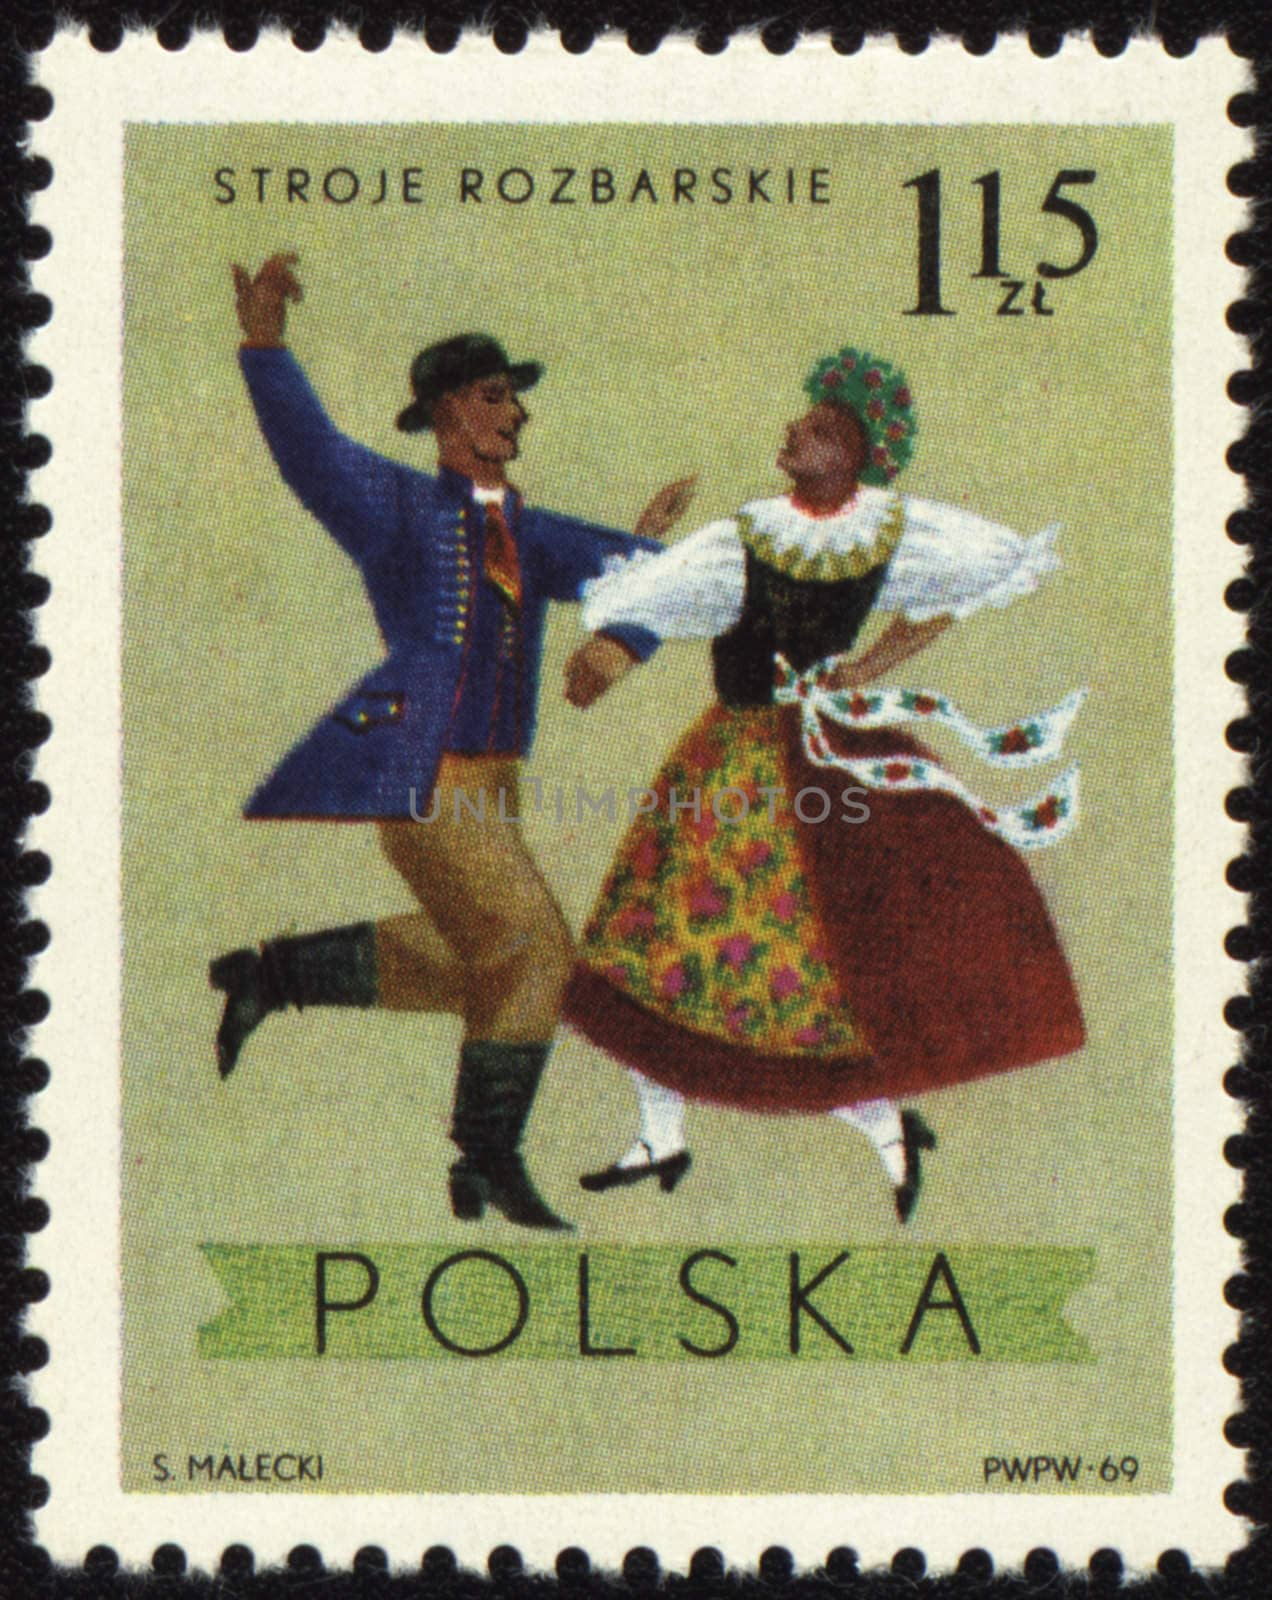 POLAND - CIRCA 1969: A stamp printed in Poland shows polish folk dancers in costumes from Rozbarskie region, series, circa 1969